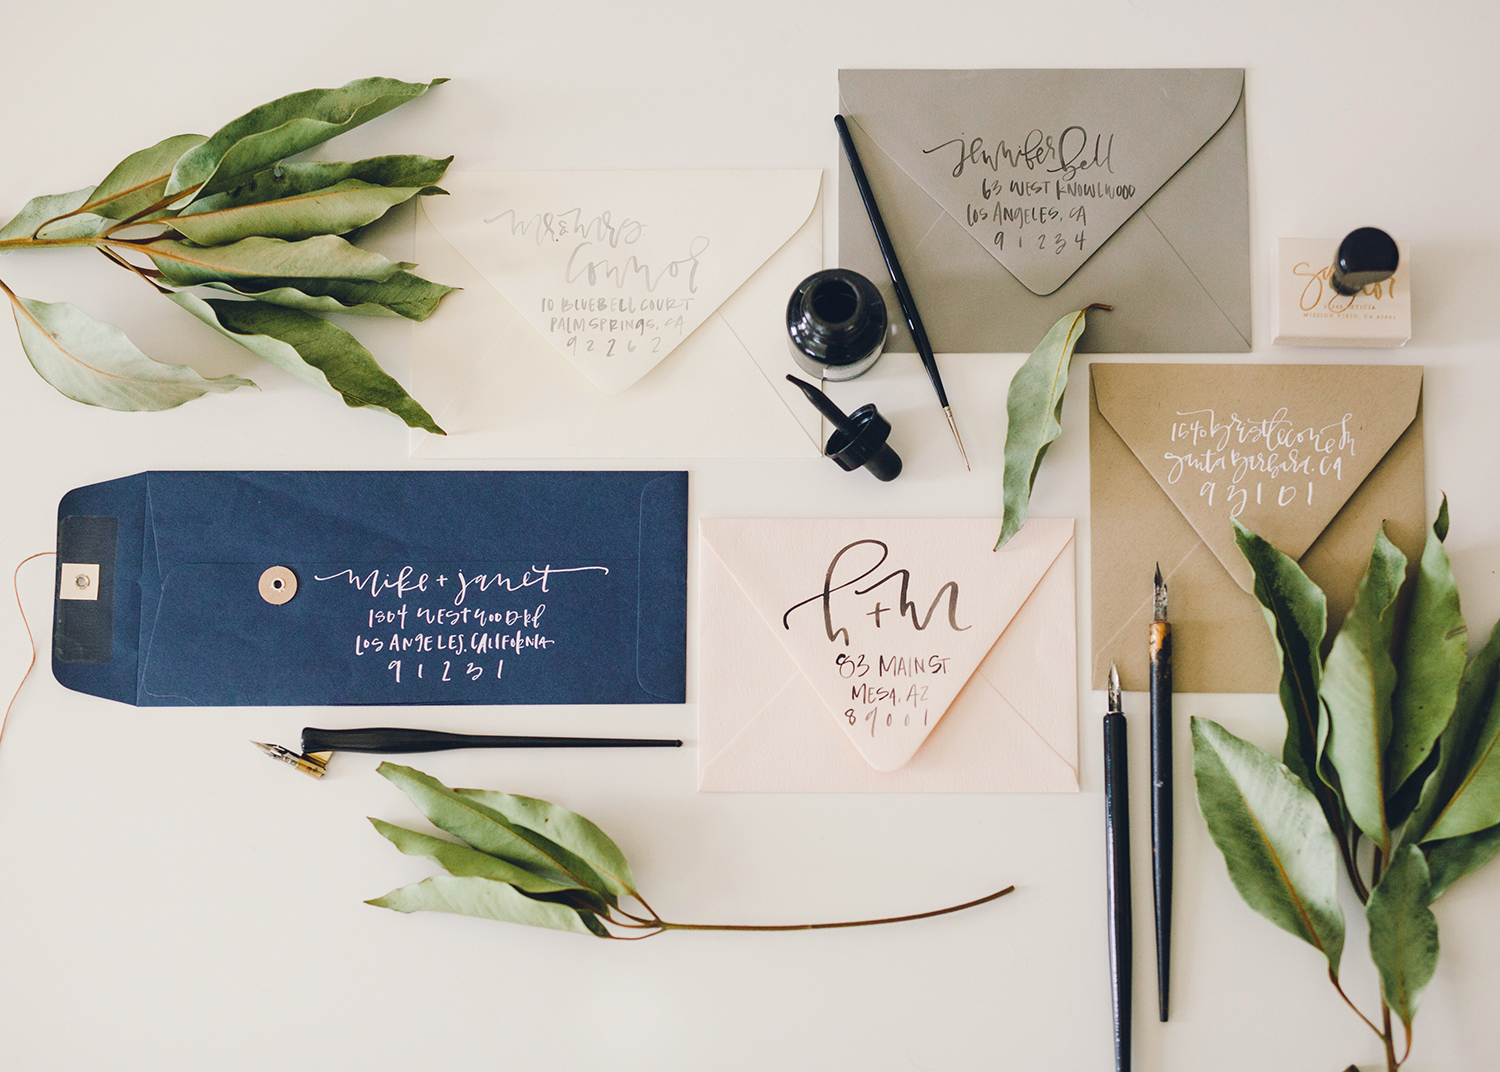 Handwritten or Printed Wedding Envelopes: What's Correct?